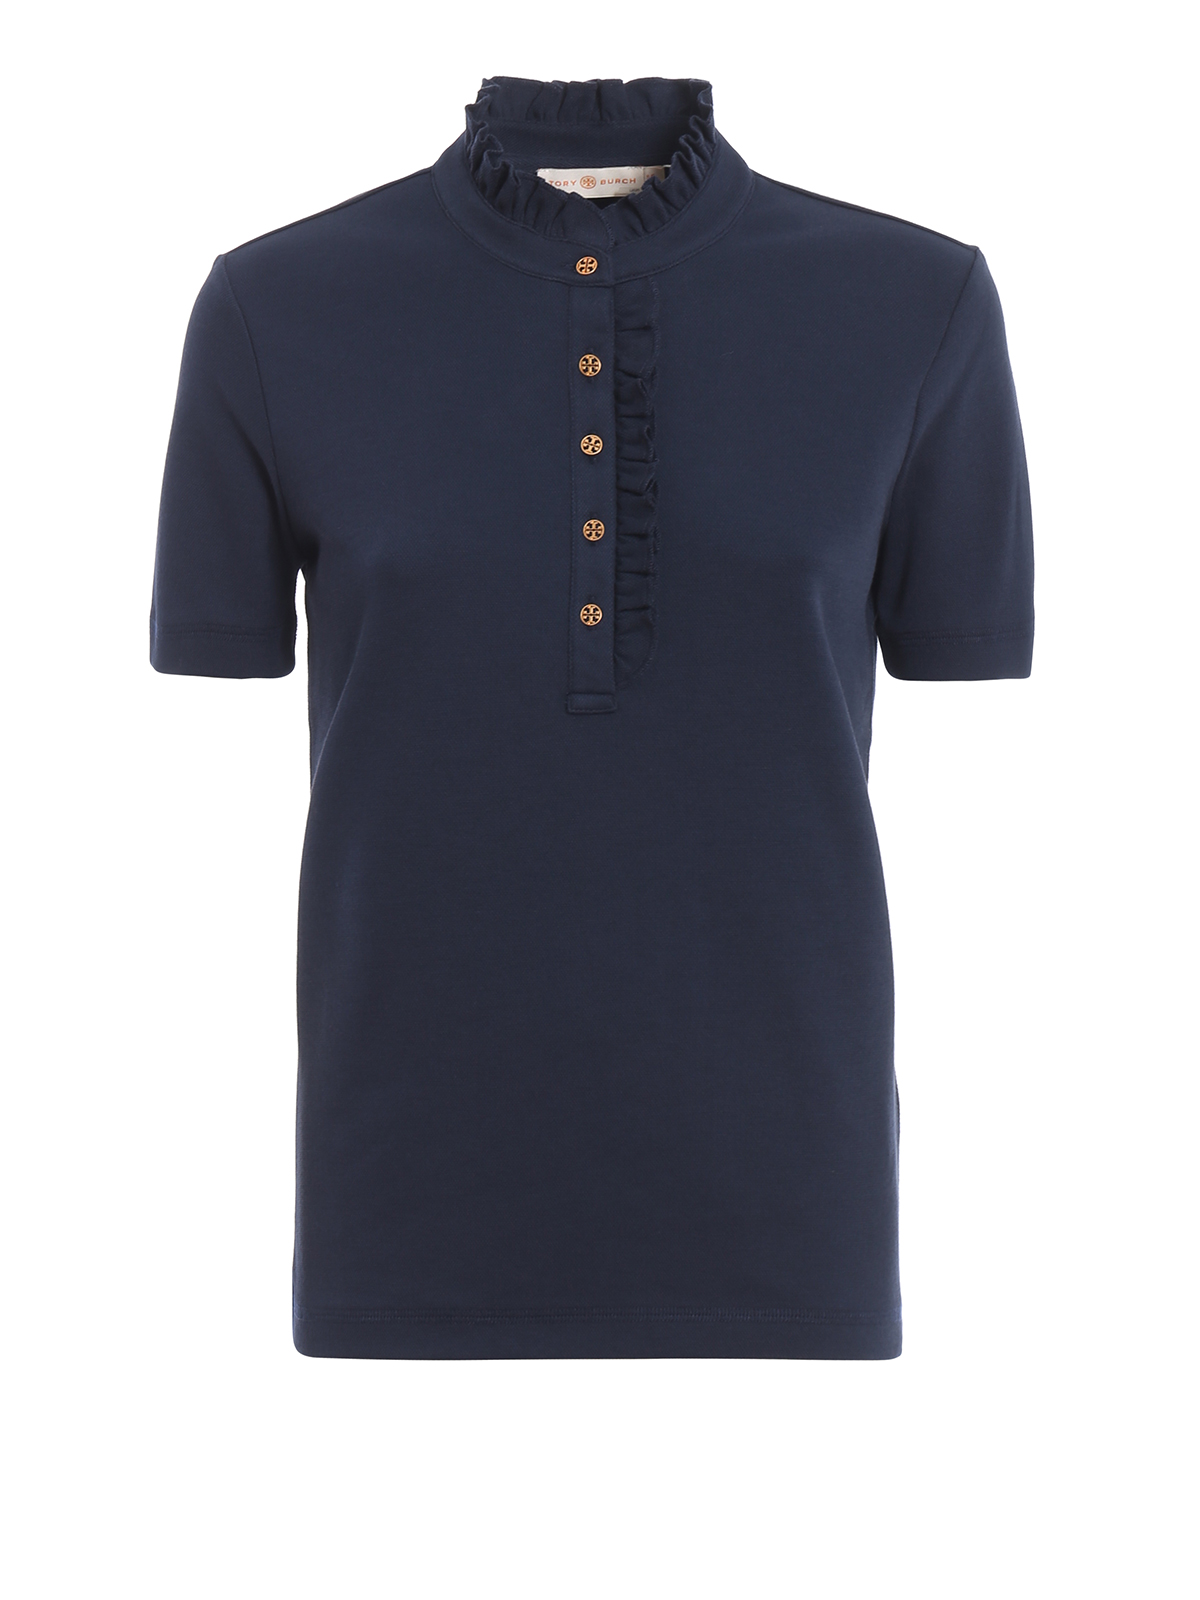 Polo shirts Tory Burch - Deneuve navy blue polo shirt - 48392405